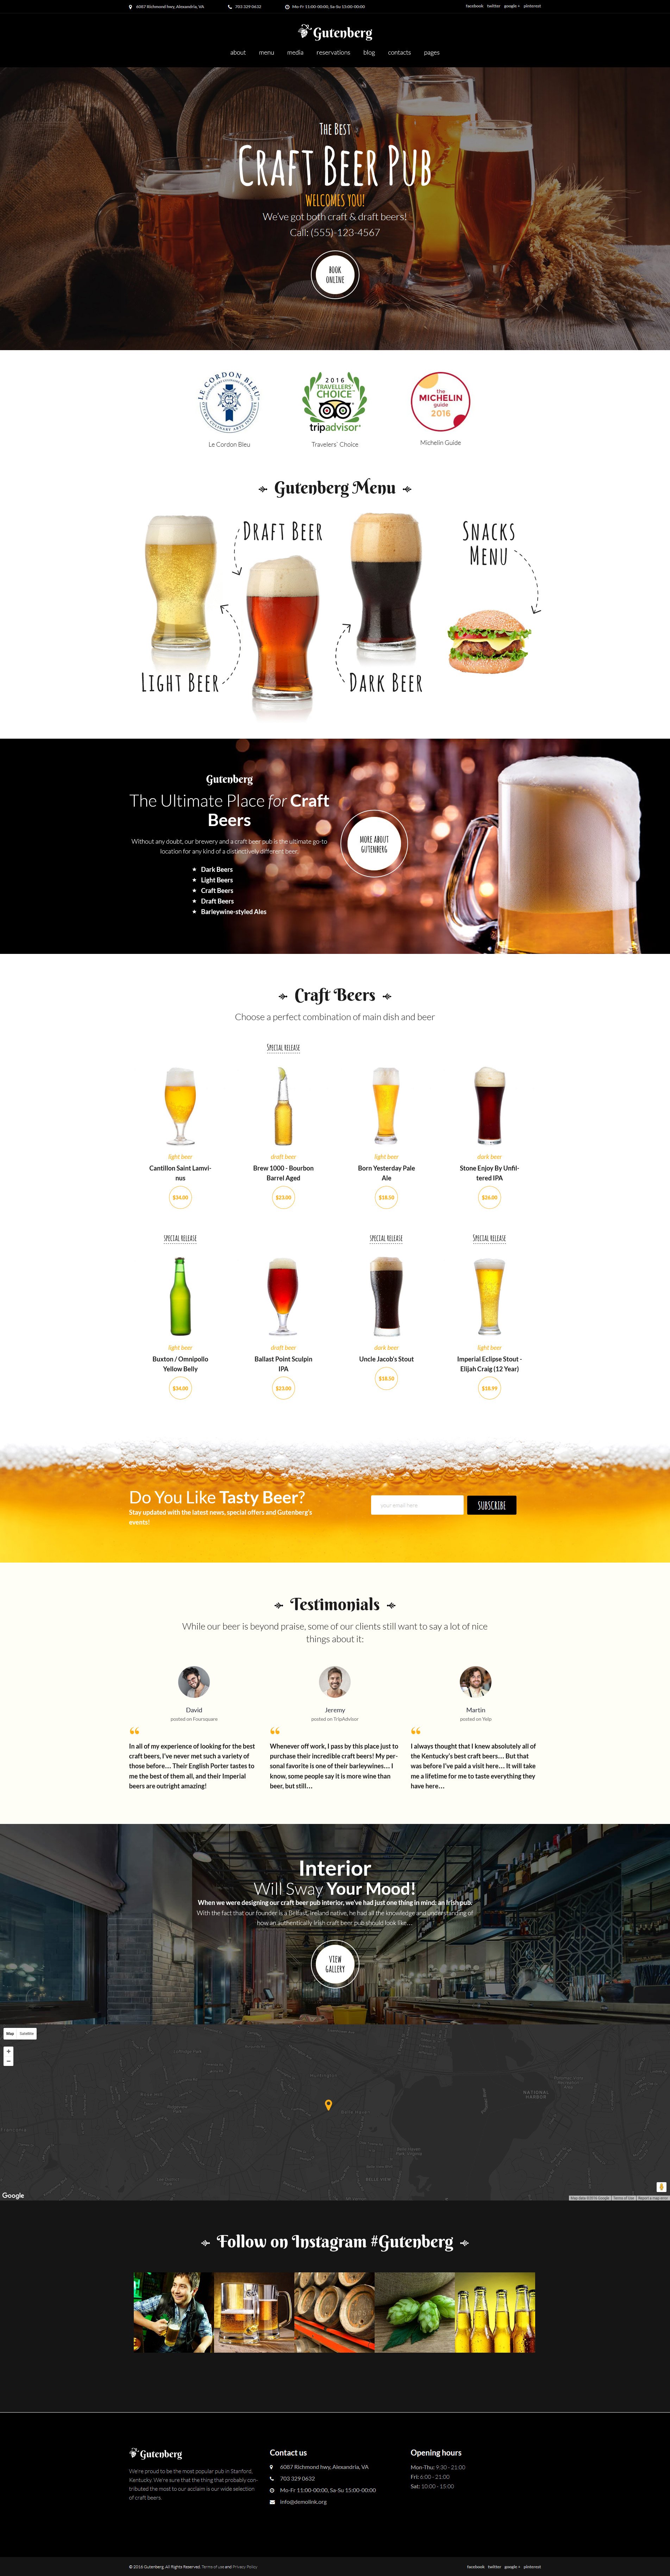 GutenBerg - Beer Pub and Brewery WordPress Theme